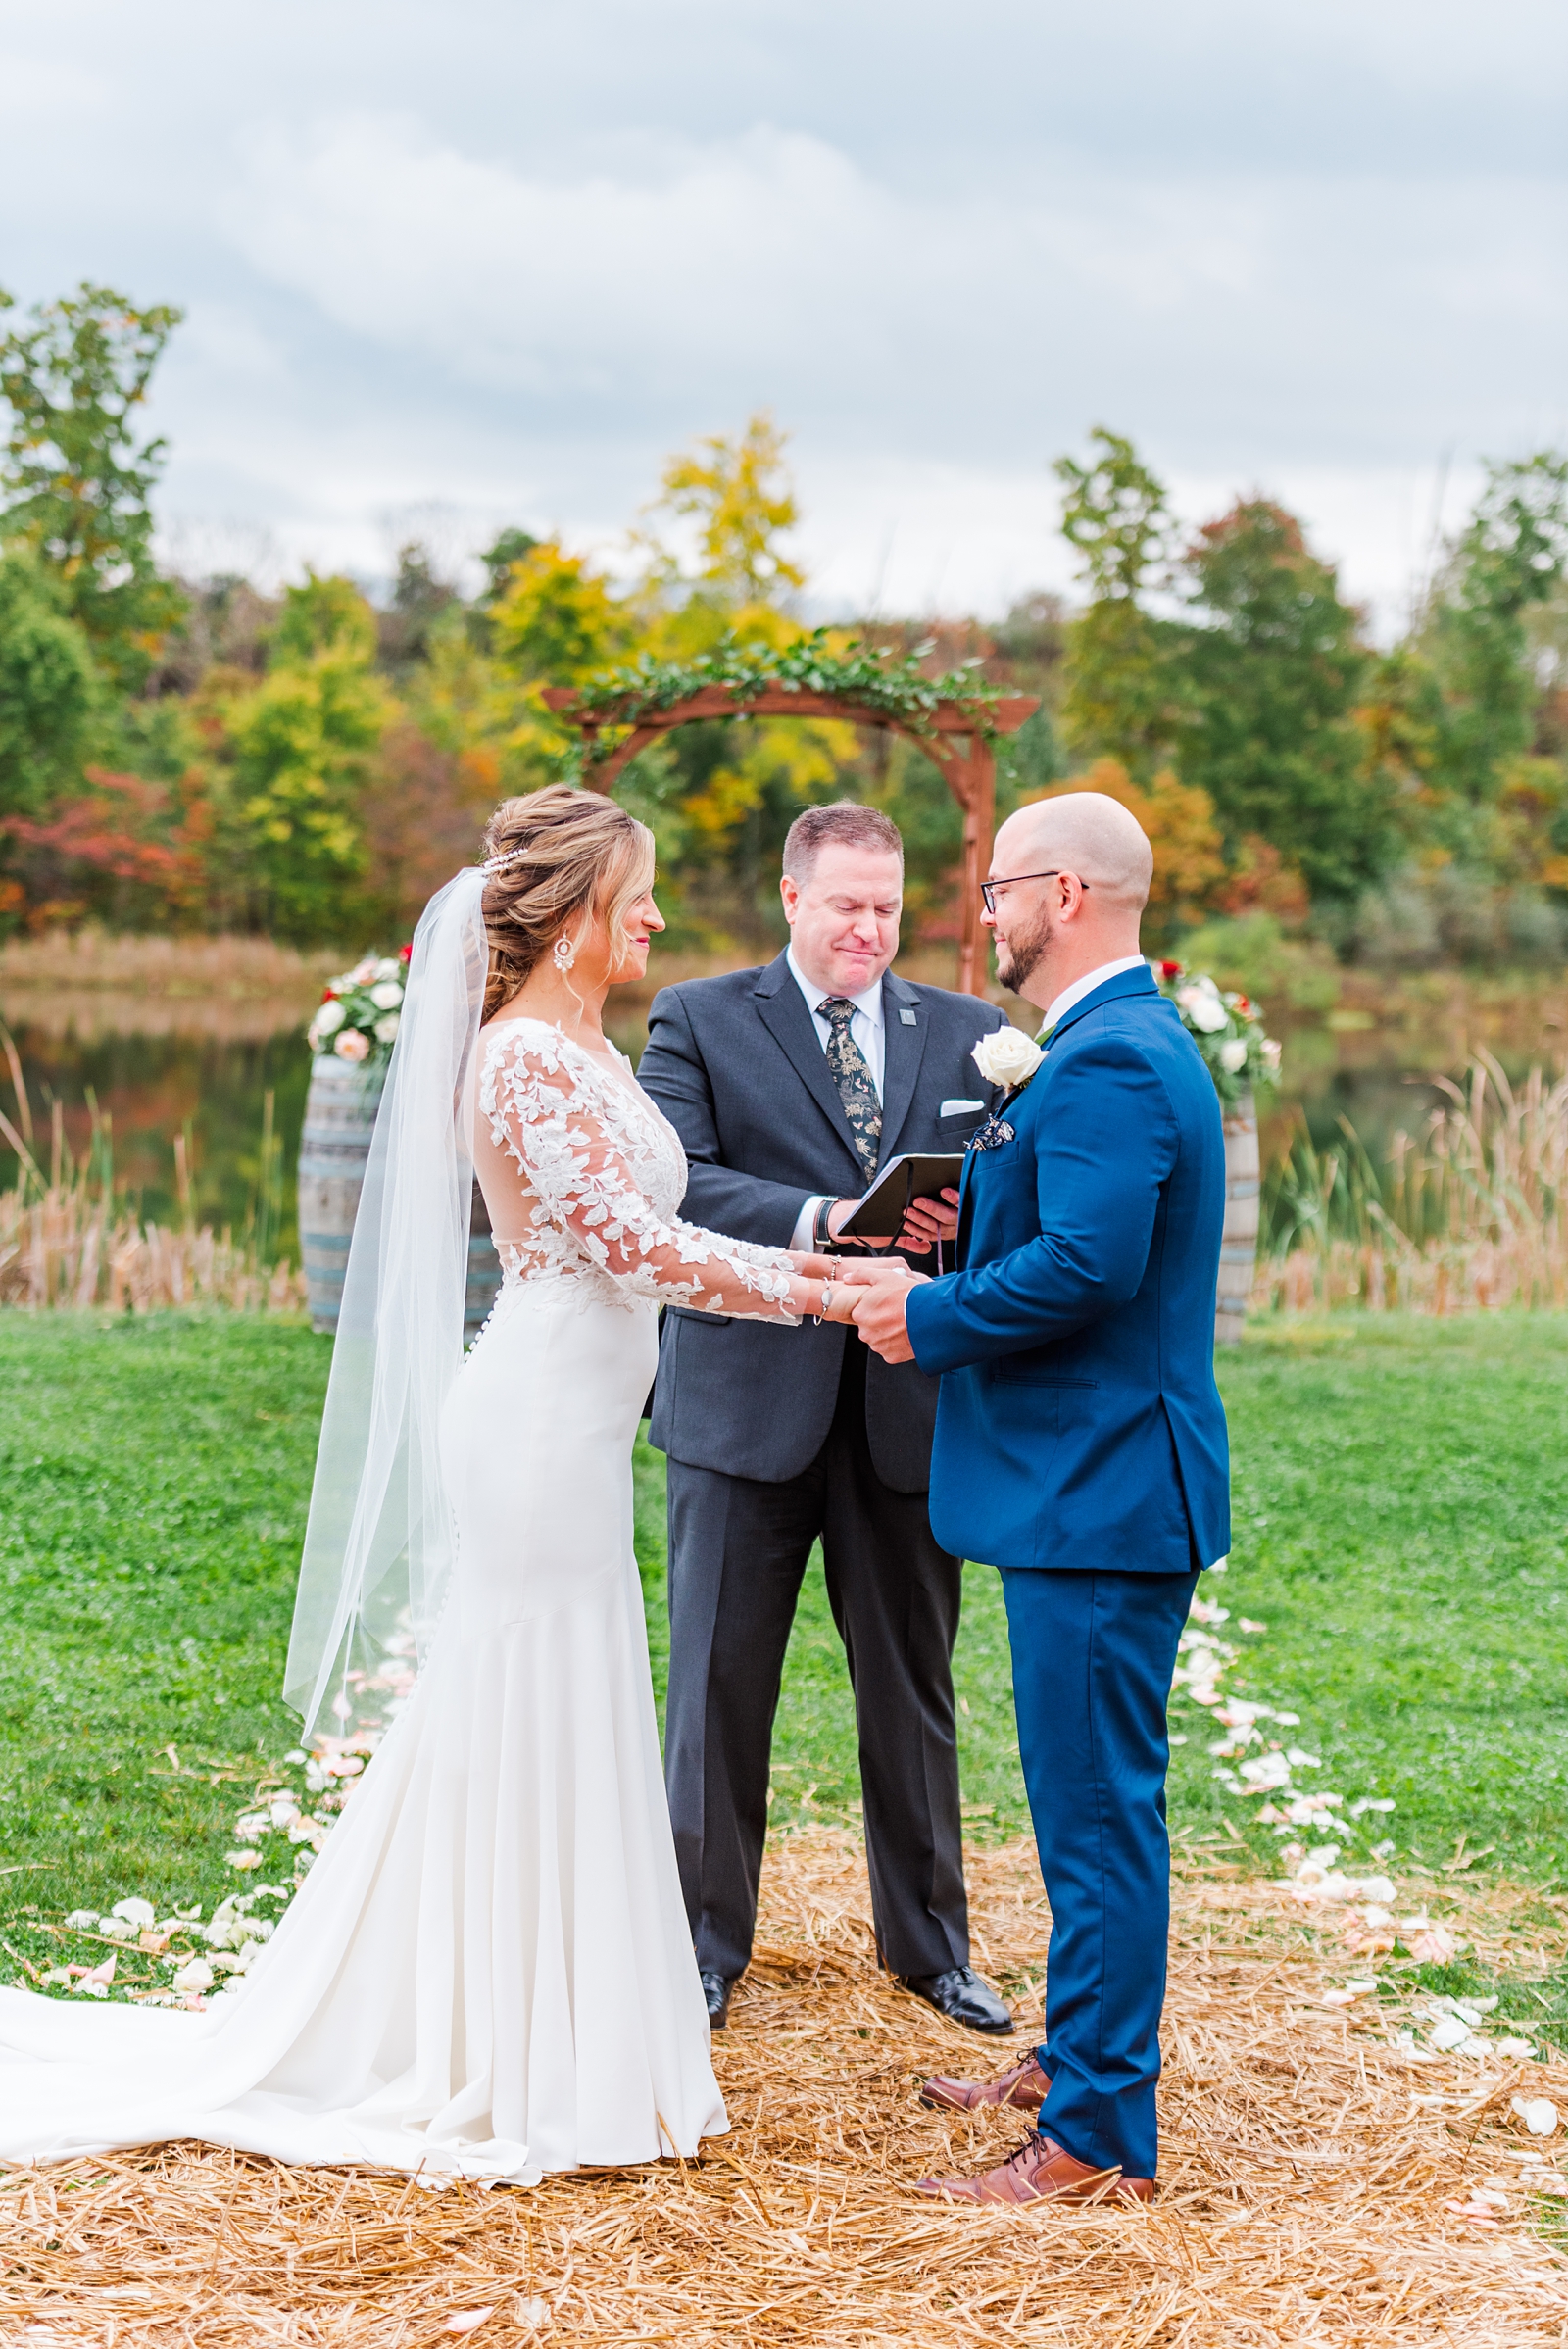 Wedding ceremony at vineyard in Pennsylvania